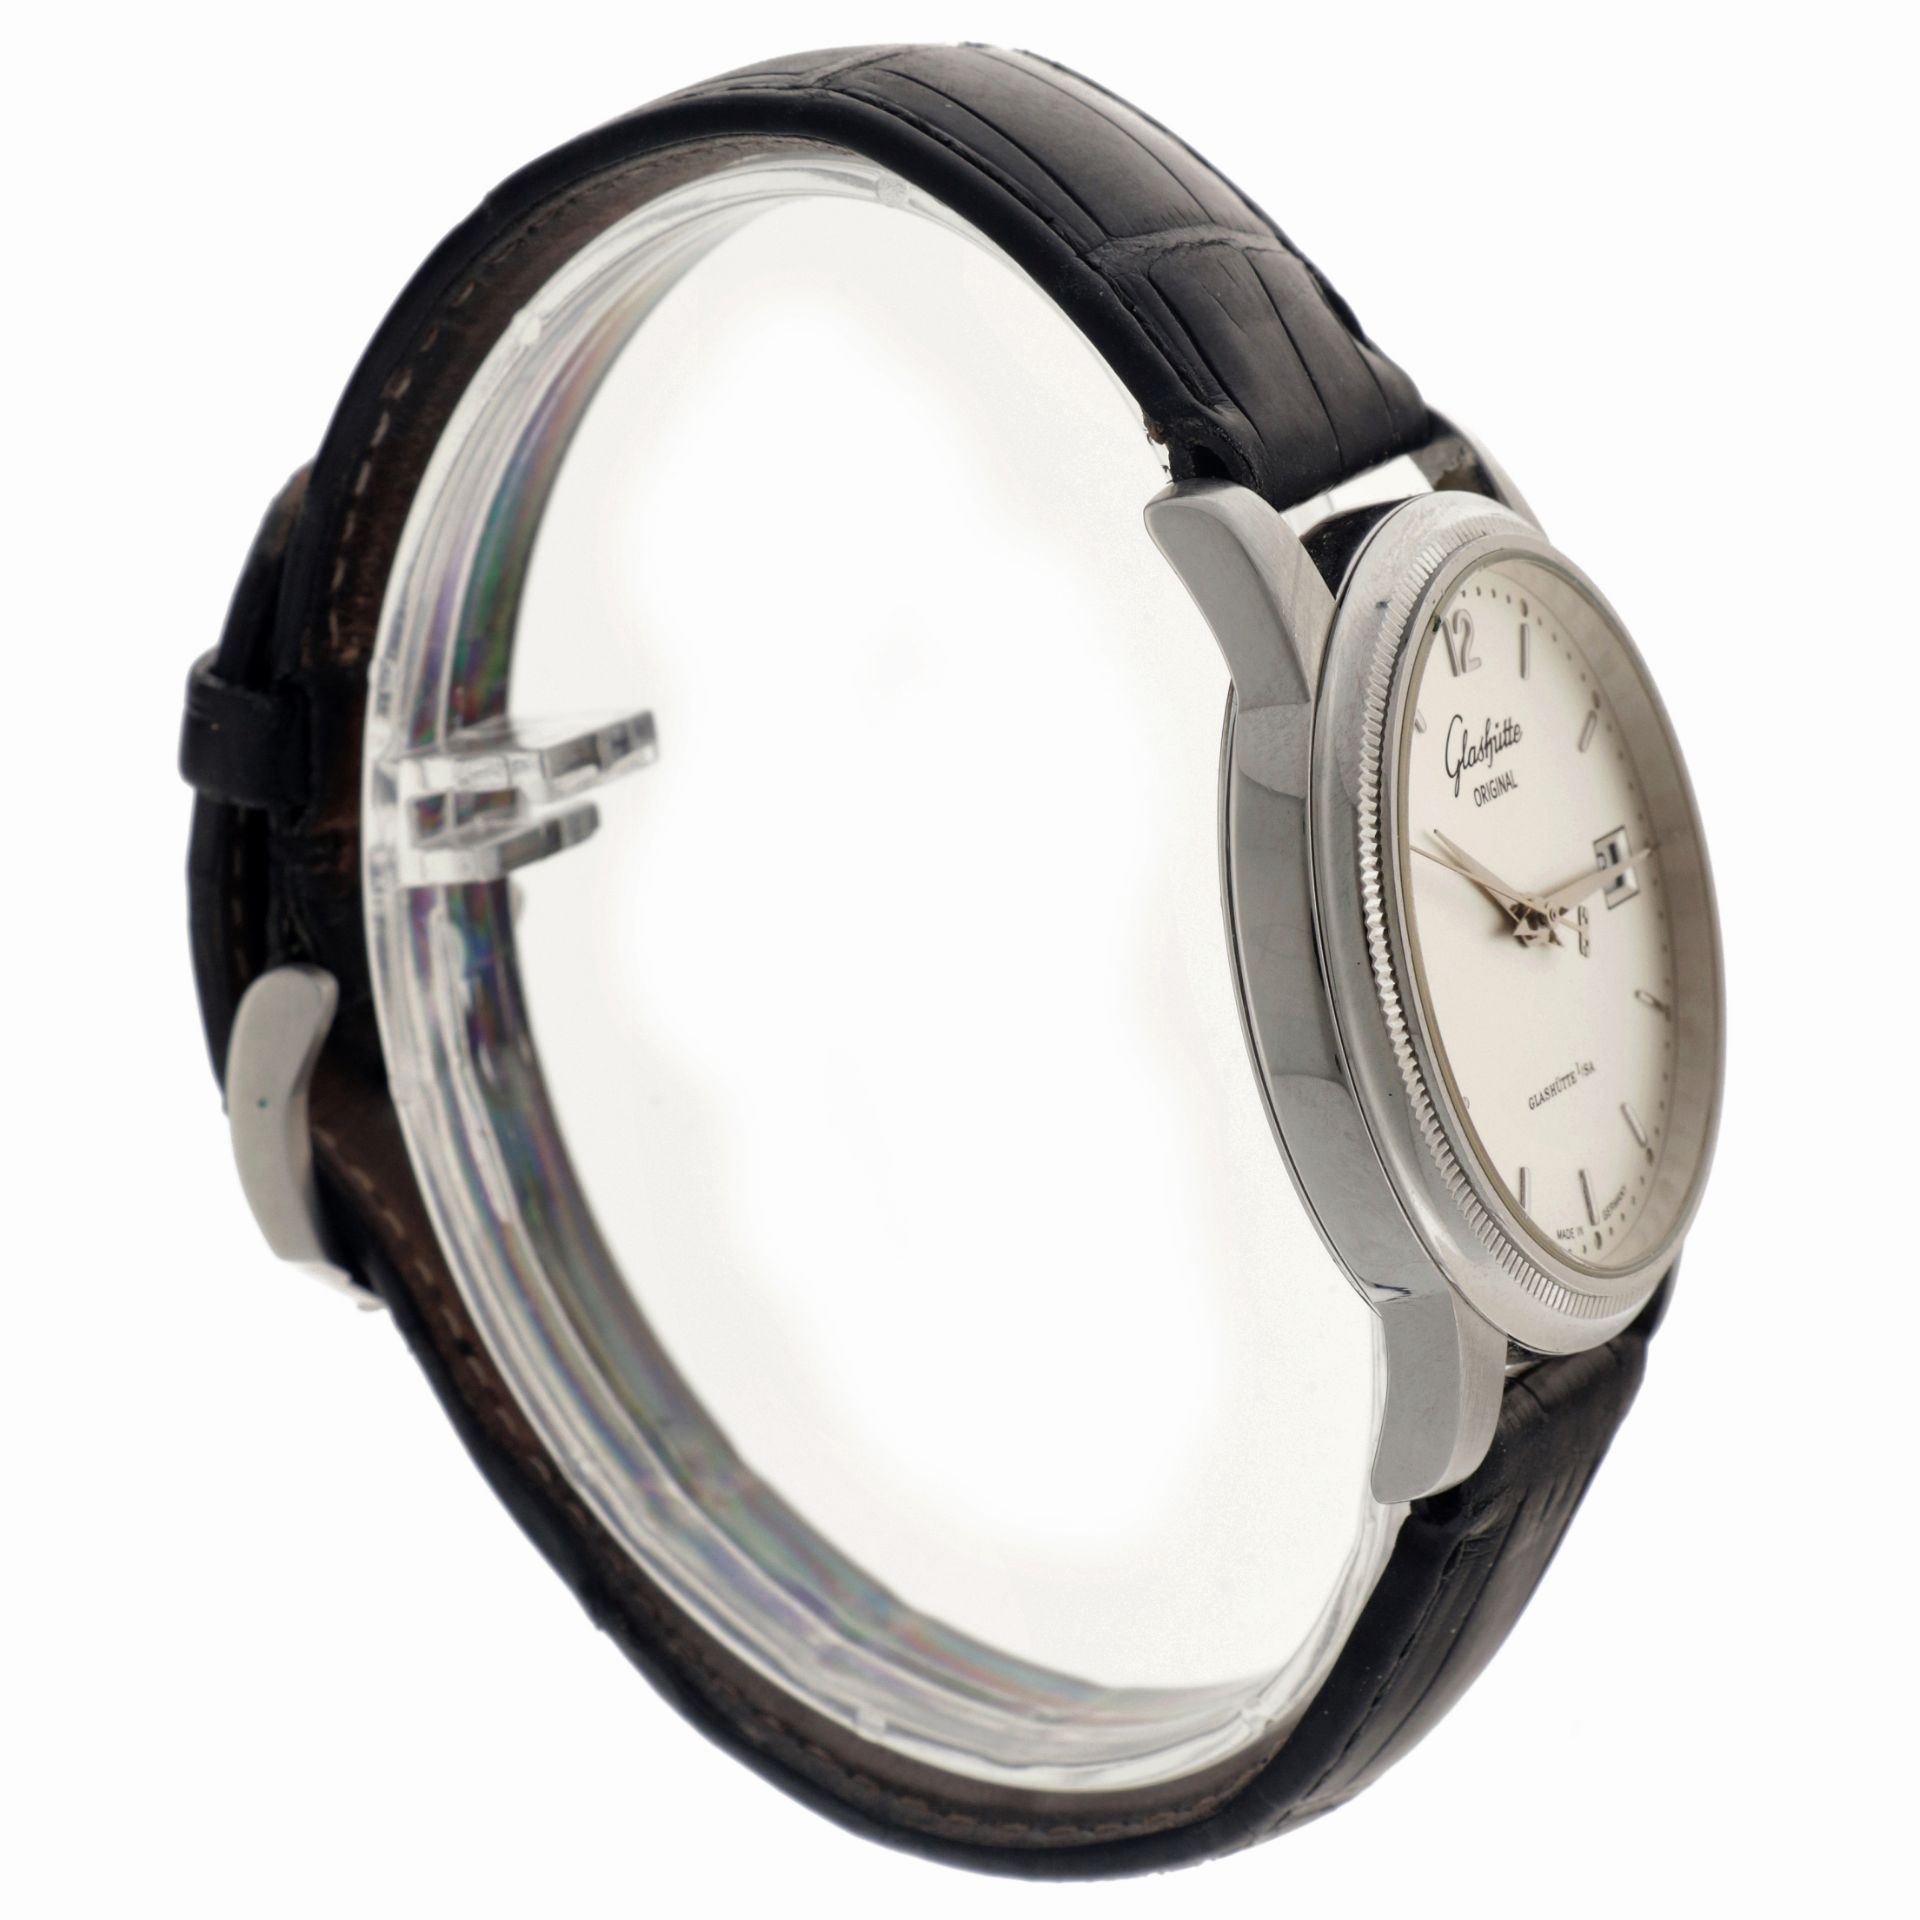 No Reserve - Glashütte Original Senator - Men's watch. - Image 4 of 5